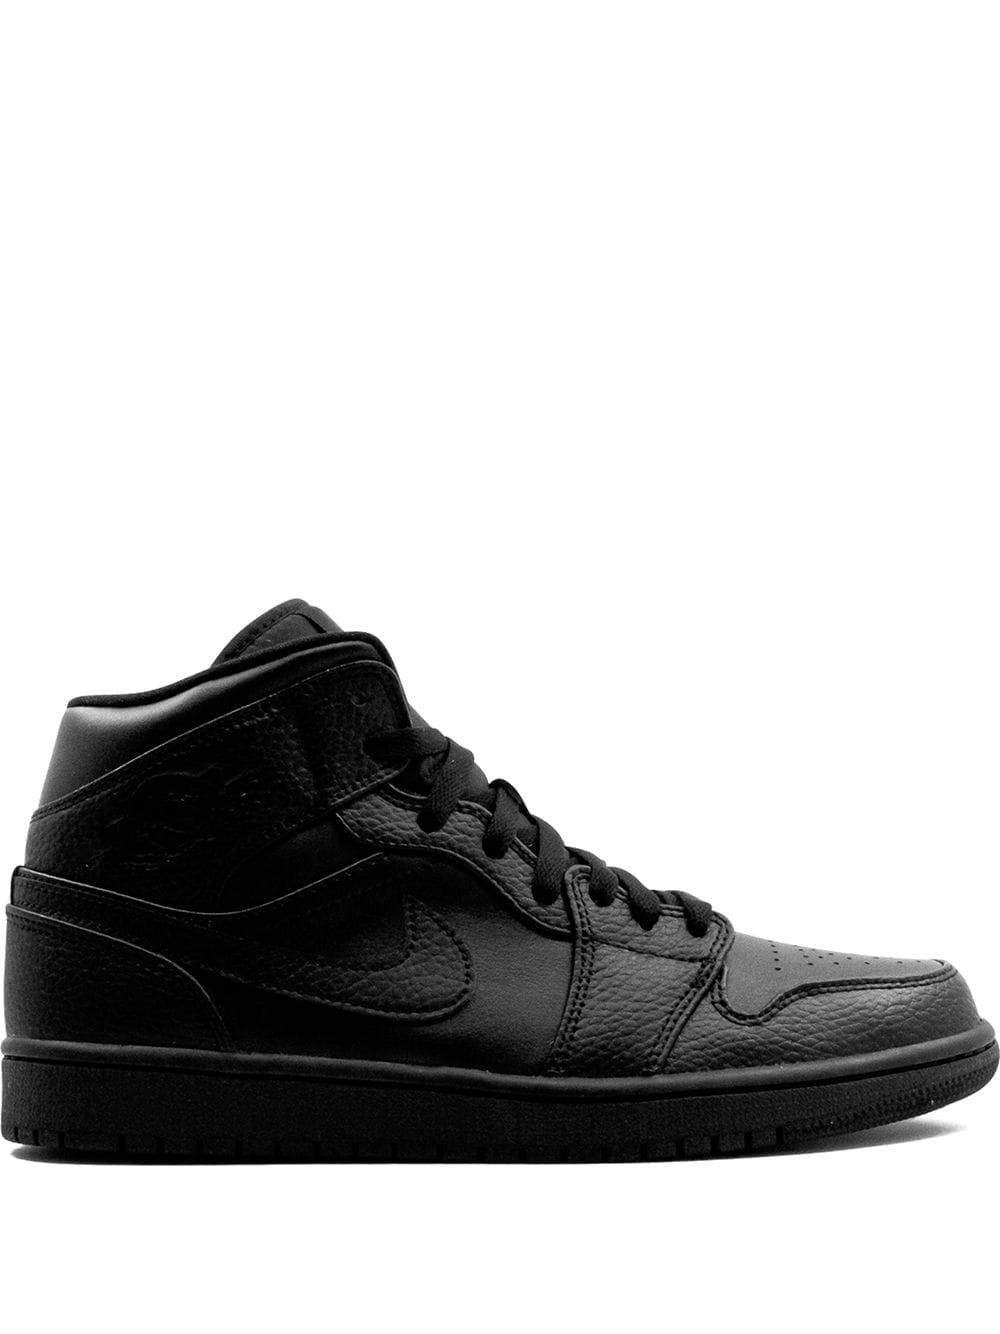 Jordan Air Jordan 1 Mid "Triple Black" sneakers